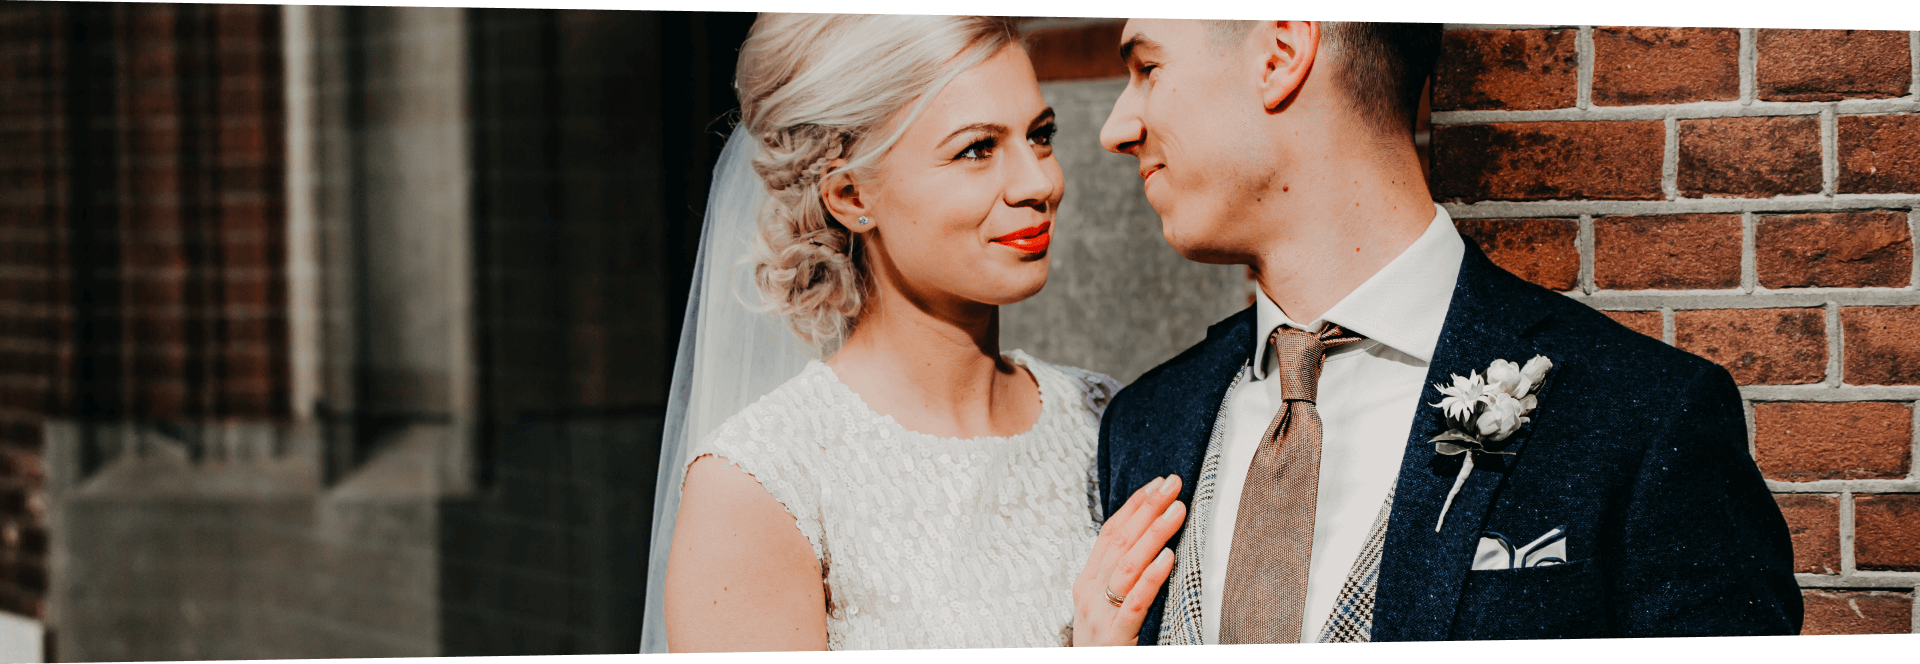 BDF_4535-Wedding Crash Breda 201802-Bas Driessen Photography (2).png